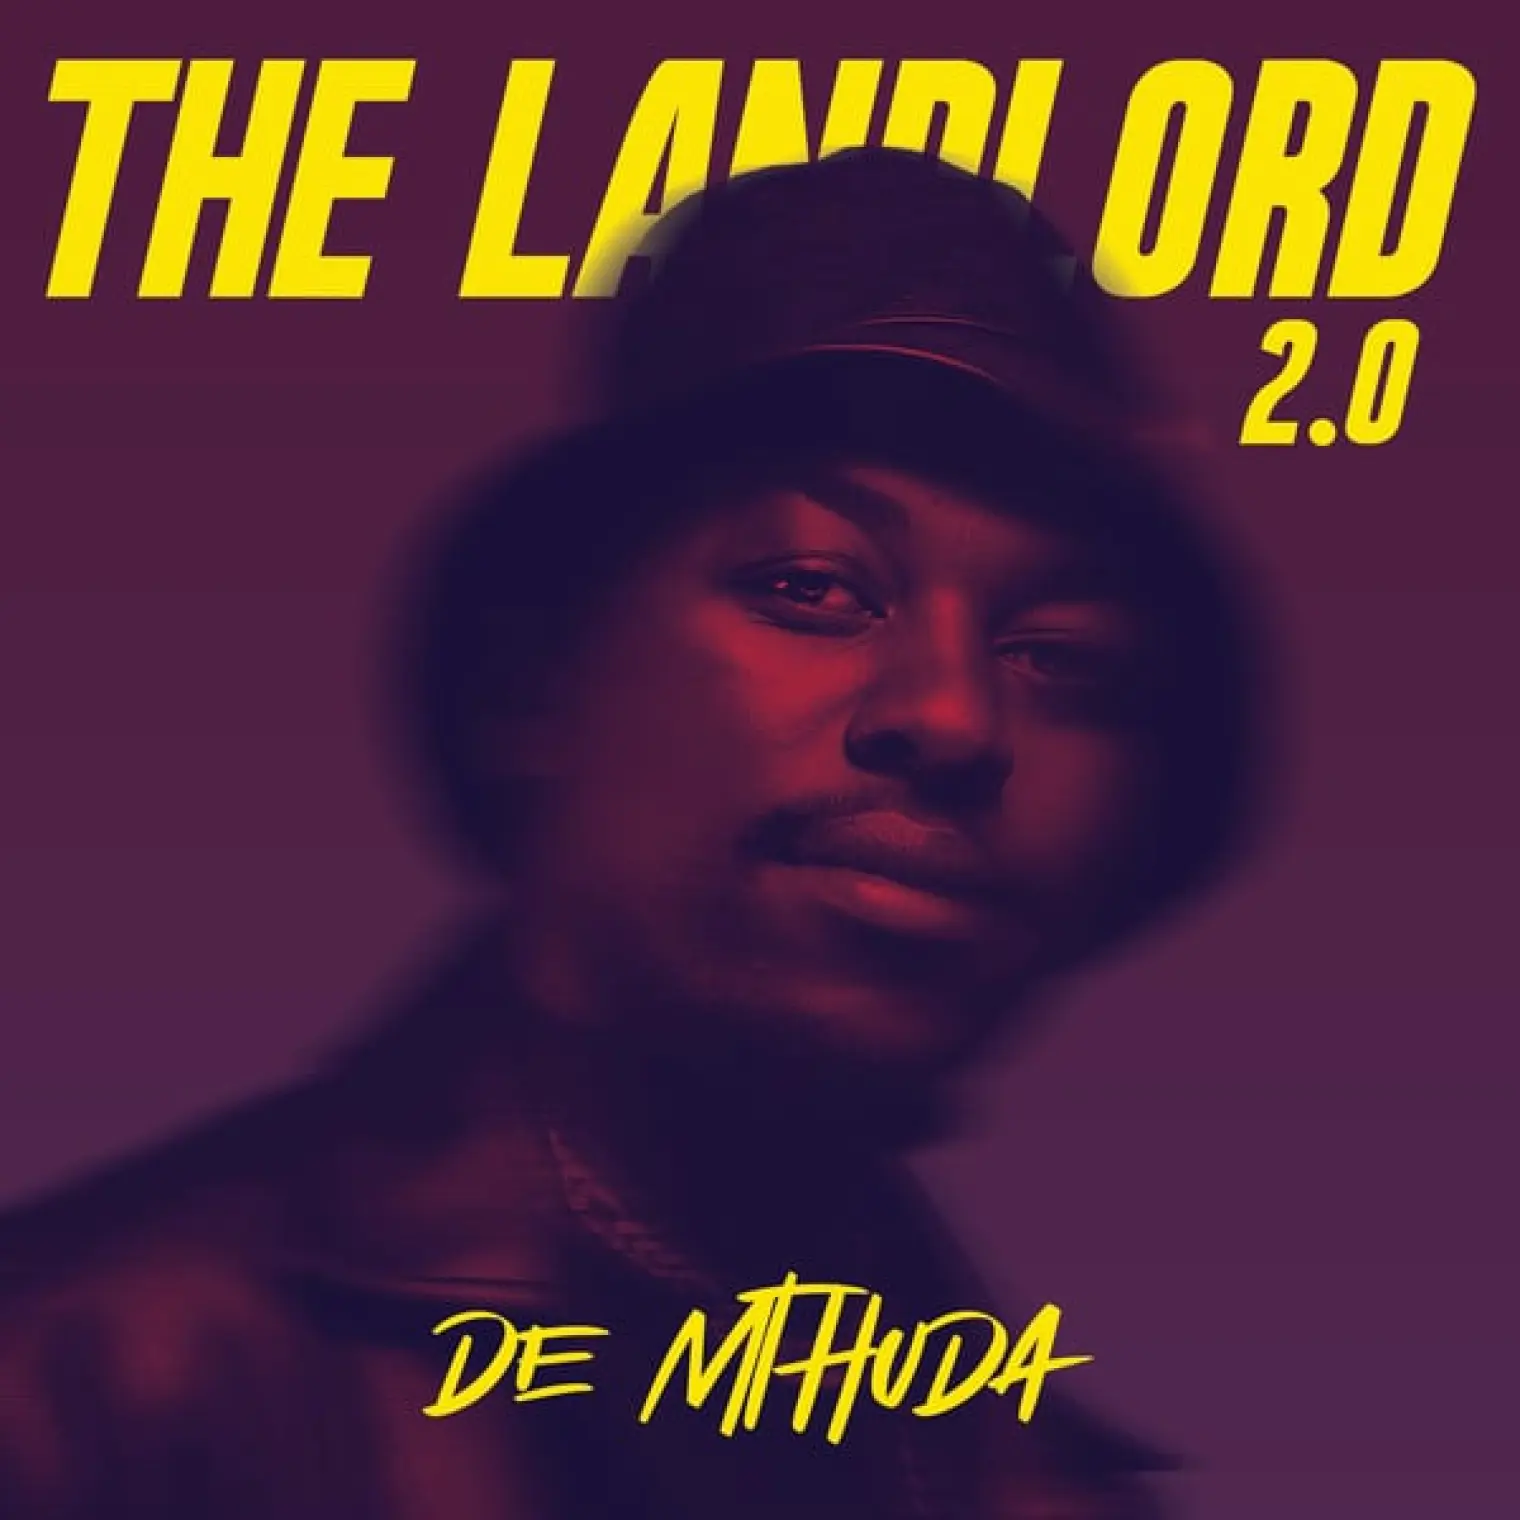 The Landlord 2.0 -  De Mthuda 